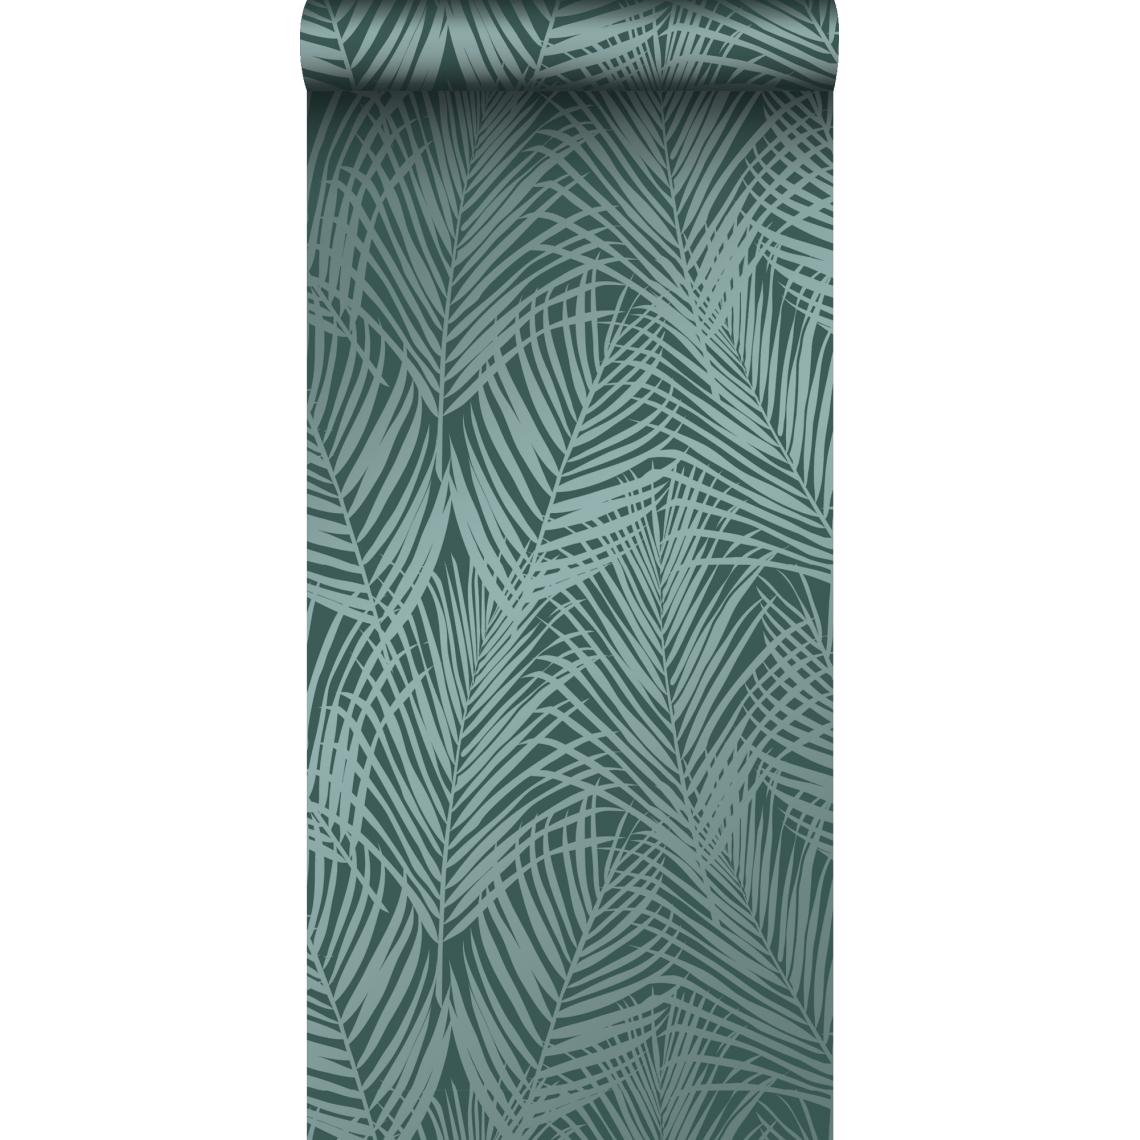 Origin - Origin papier peint feuilles de palmier vert émeraude - 347710 - 0.53 x 10.05 m - Papier peint